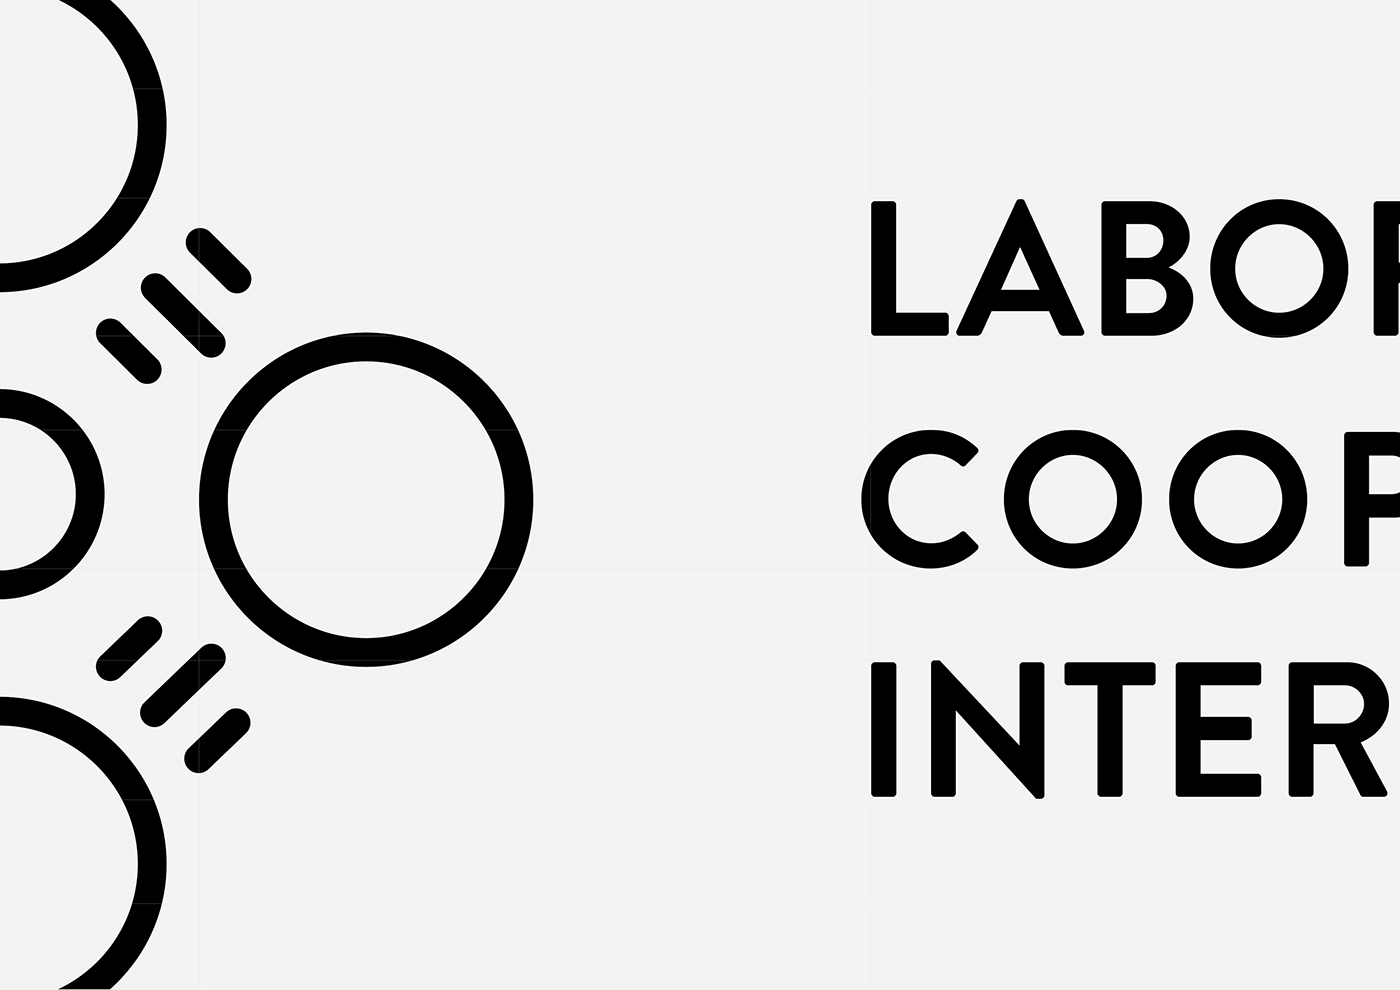 cooperation International laboratory